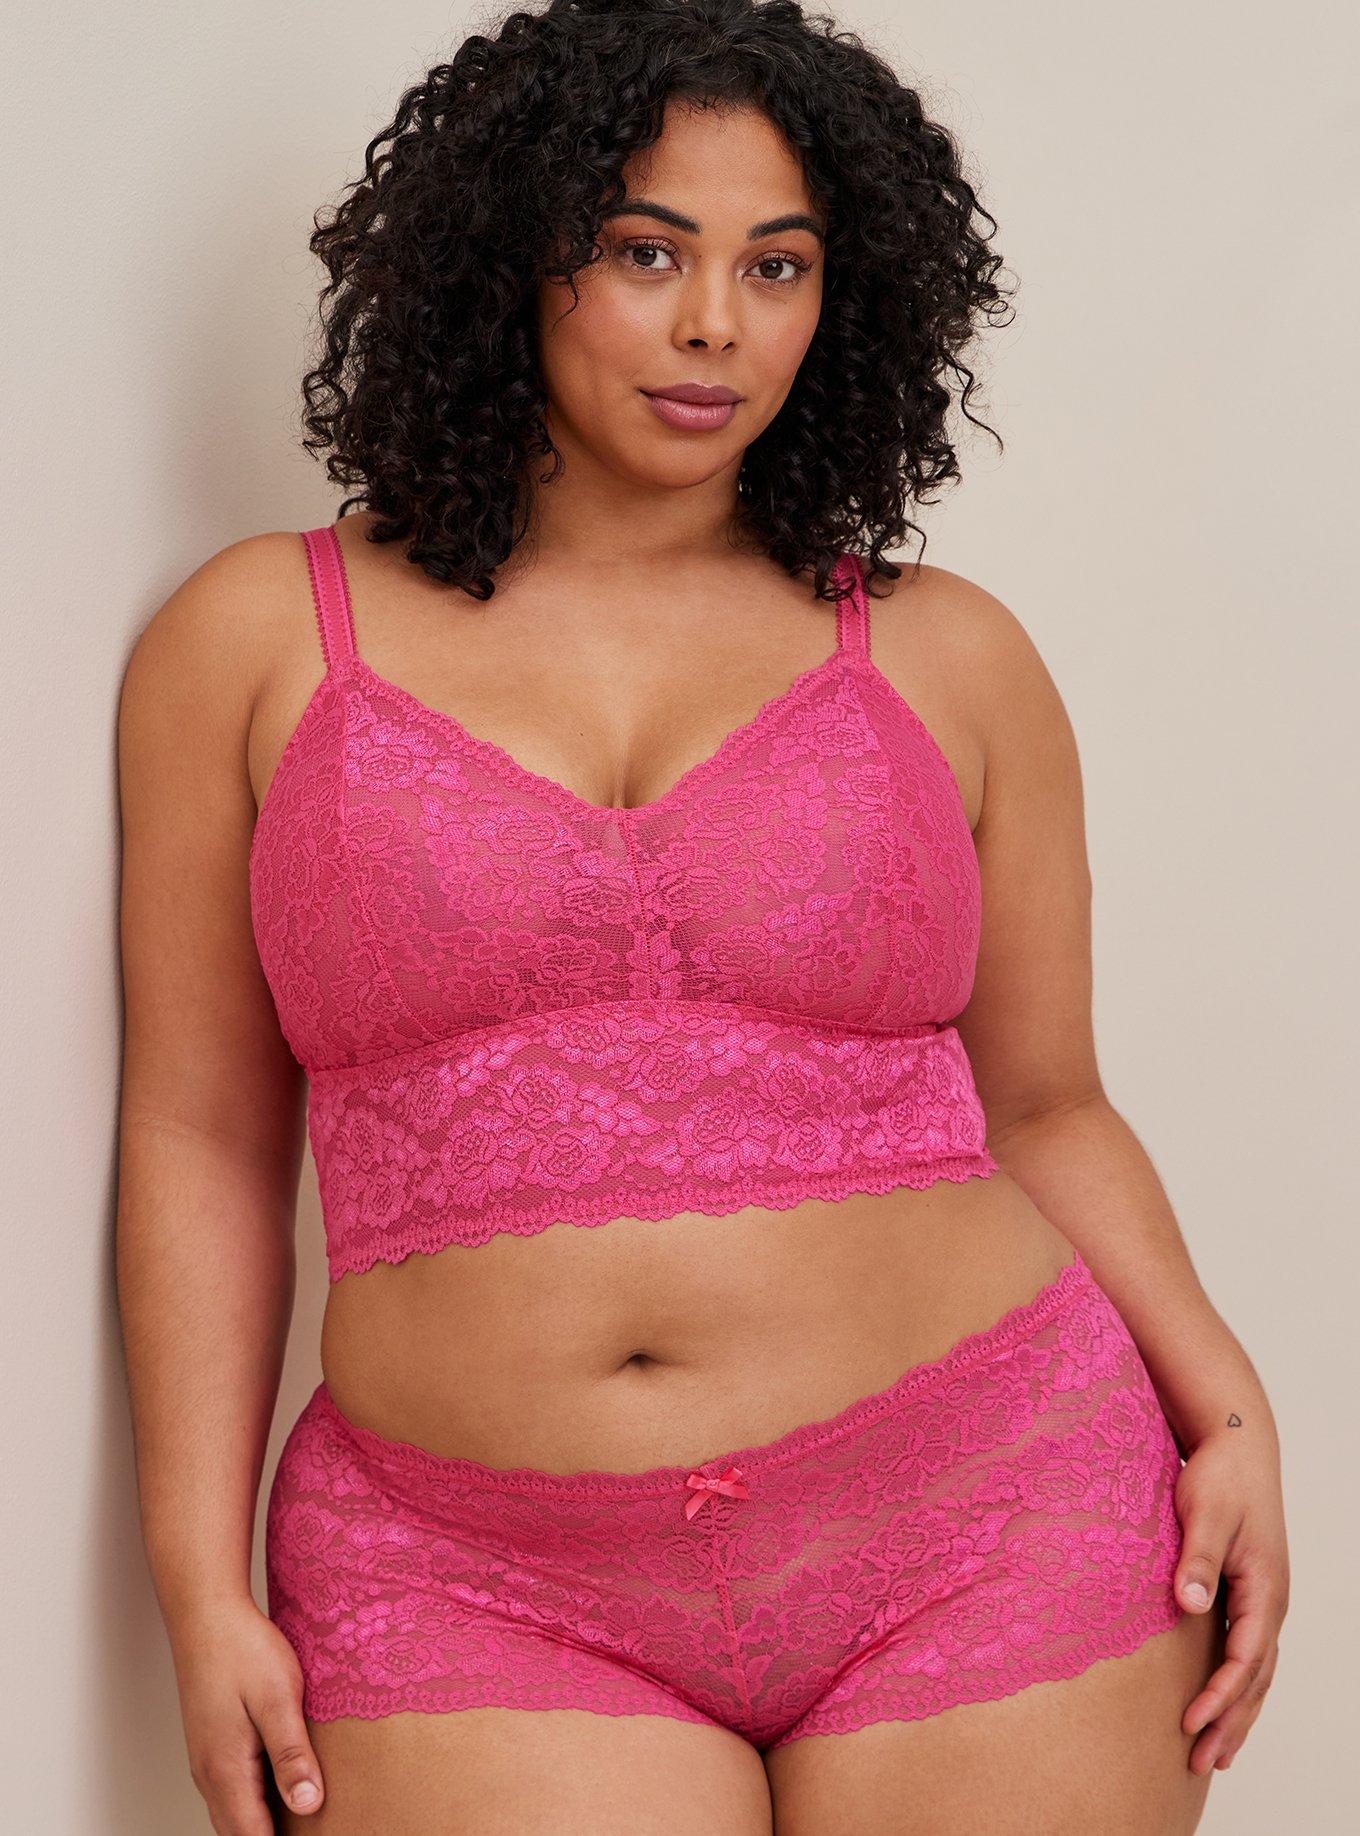 torrid, Intimates & Sleepwear, Torrid Pink Lace Bra Size42dd